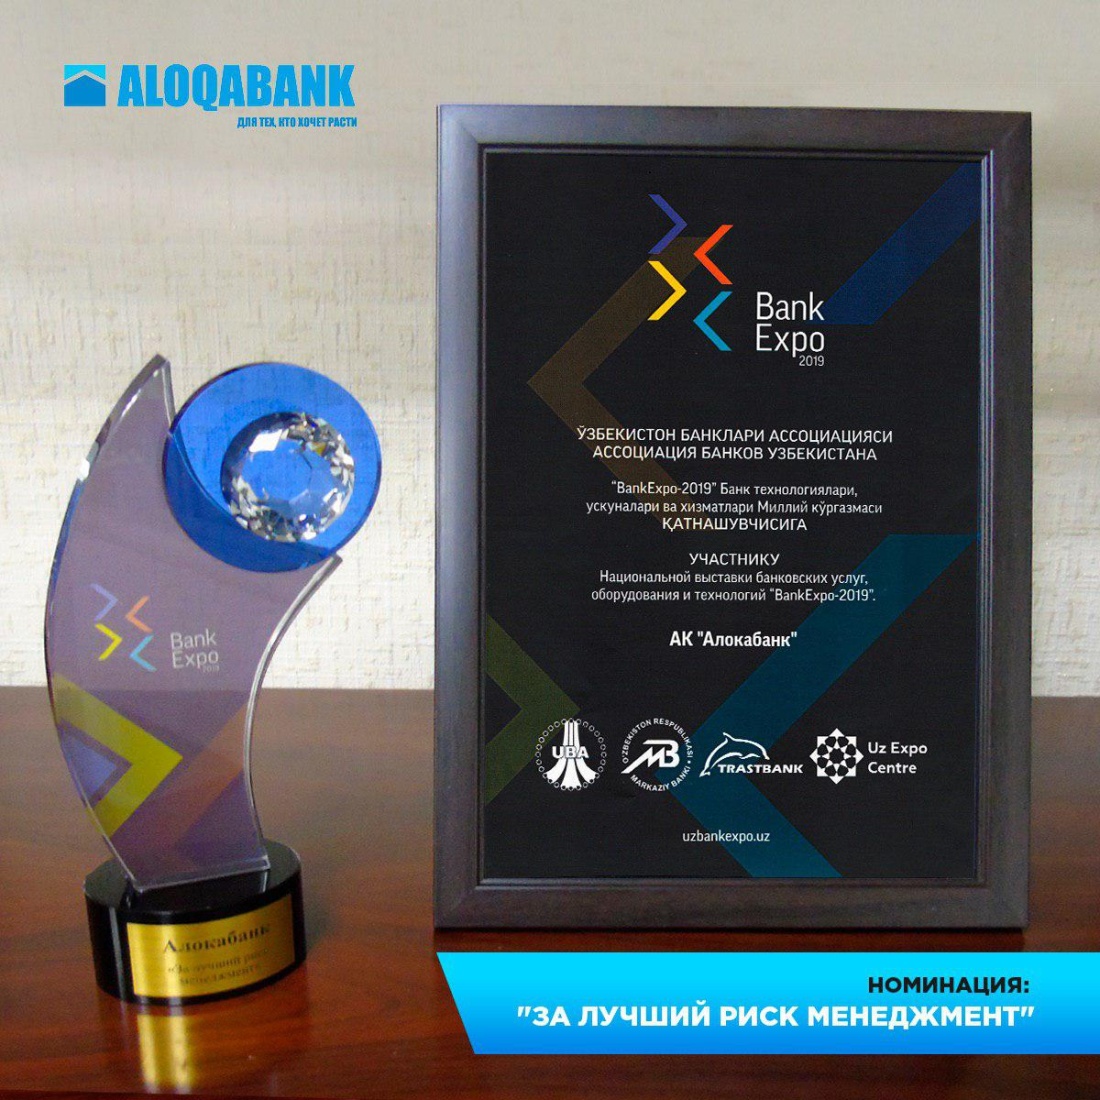 Aloqabank has been awarded